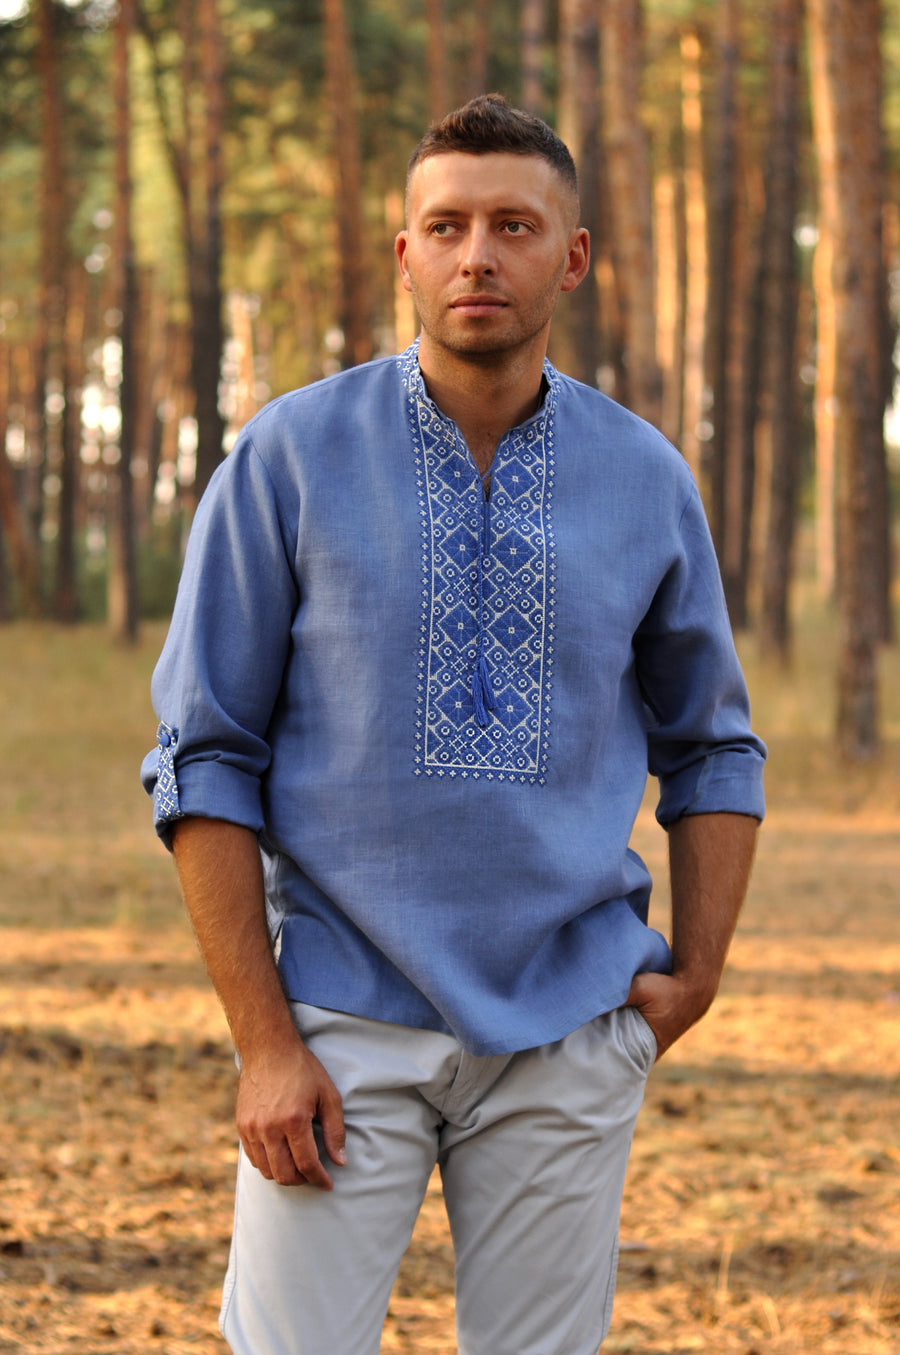 Embroidered denim style shirt